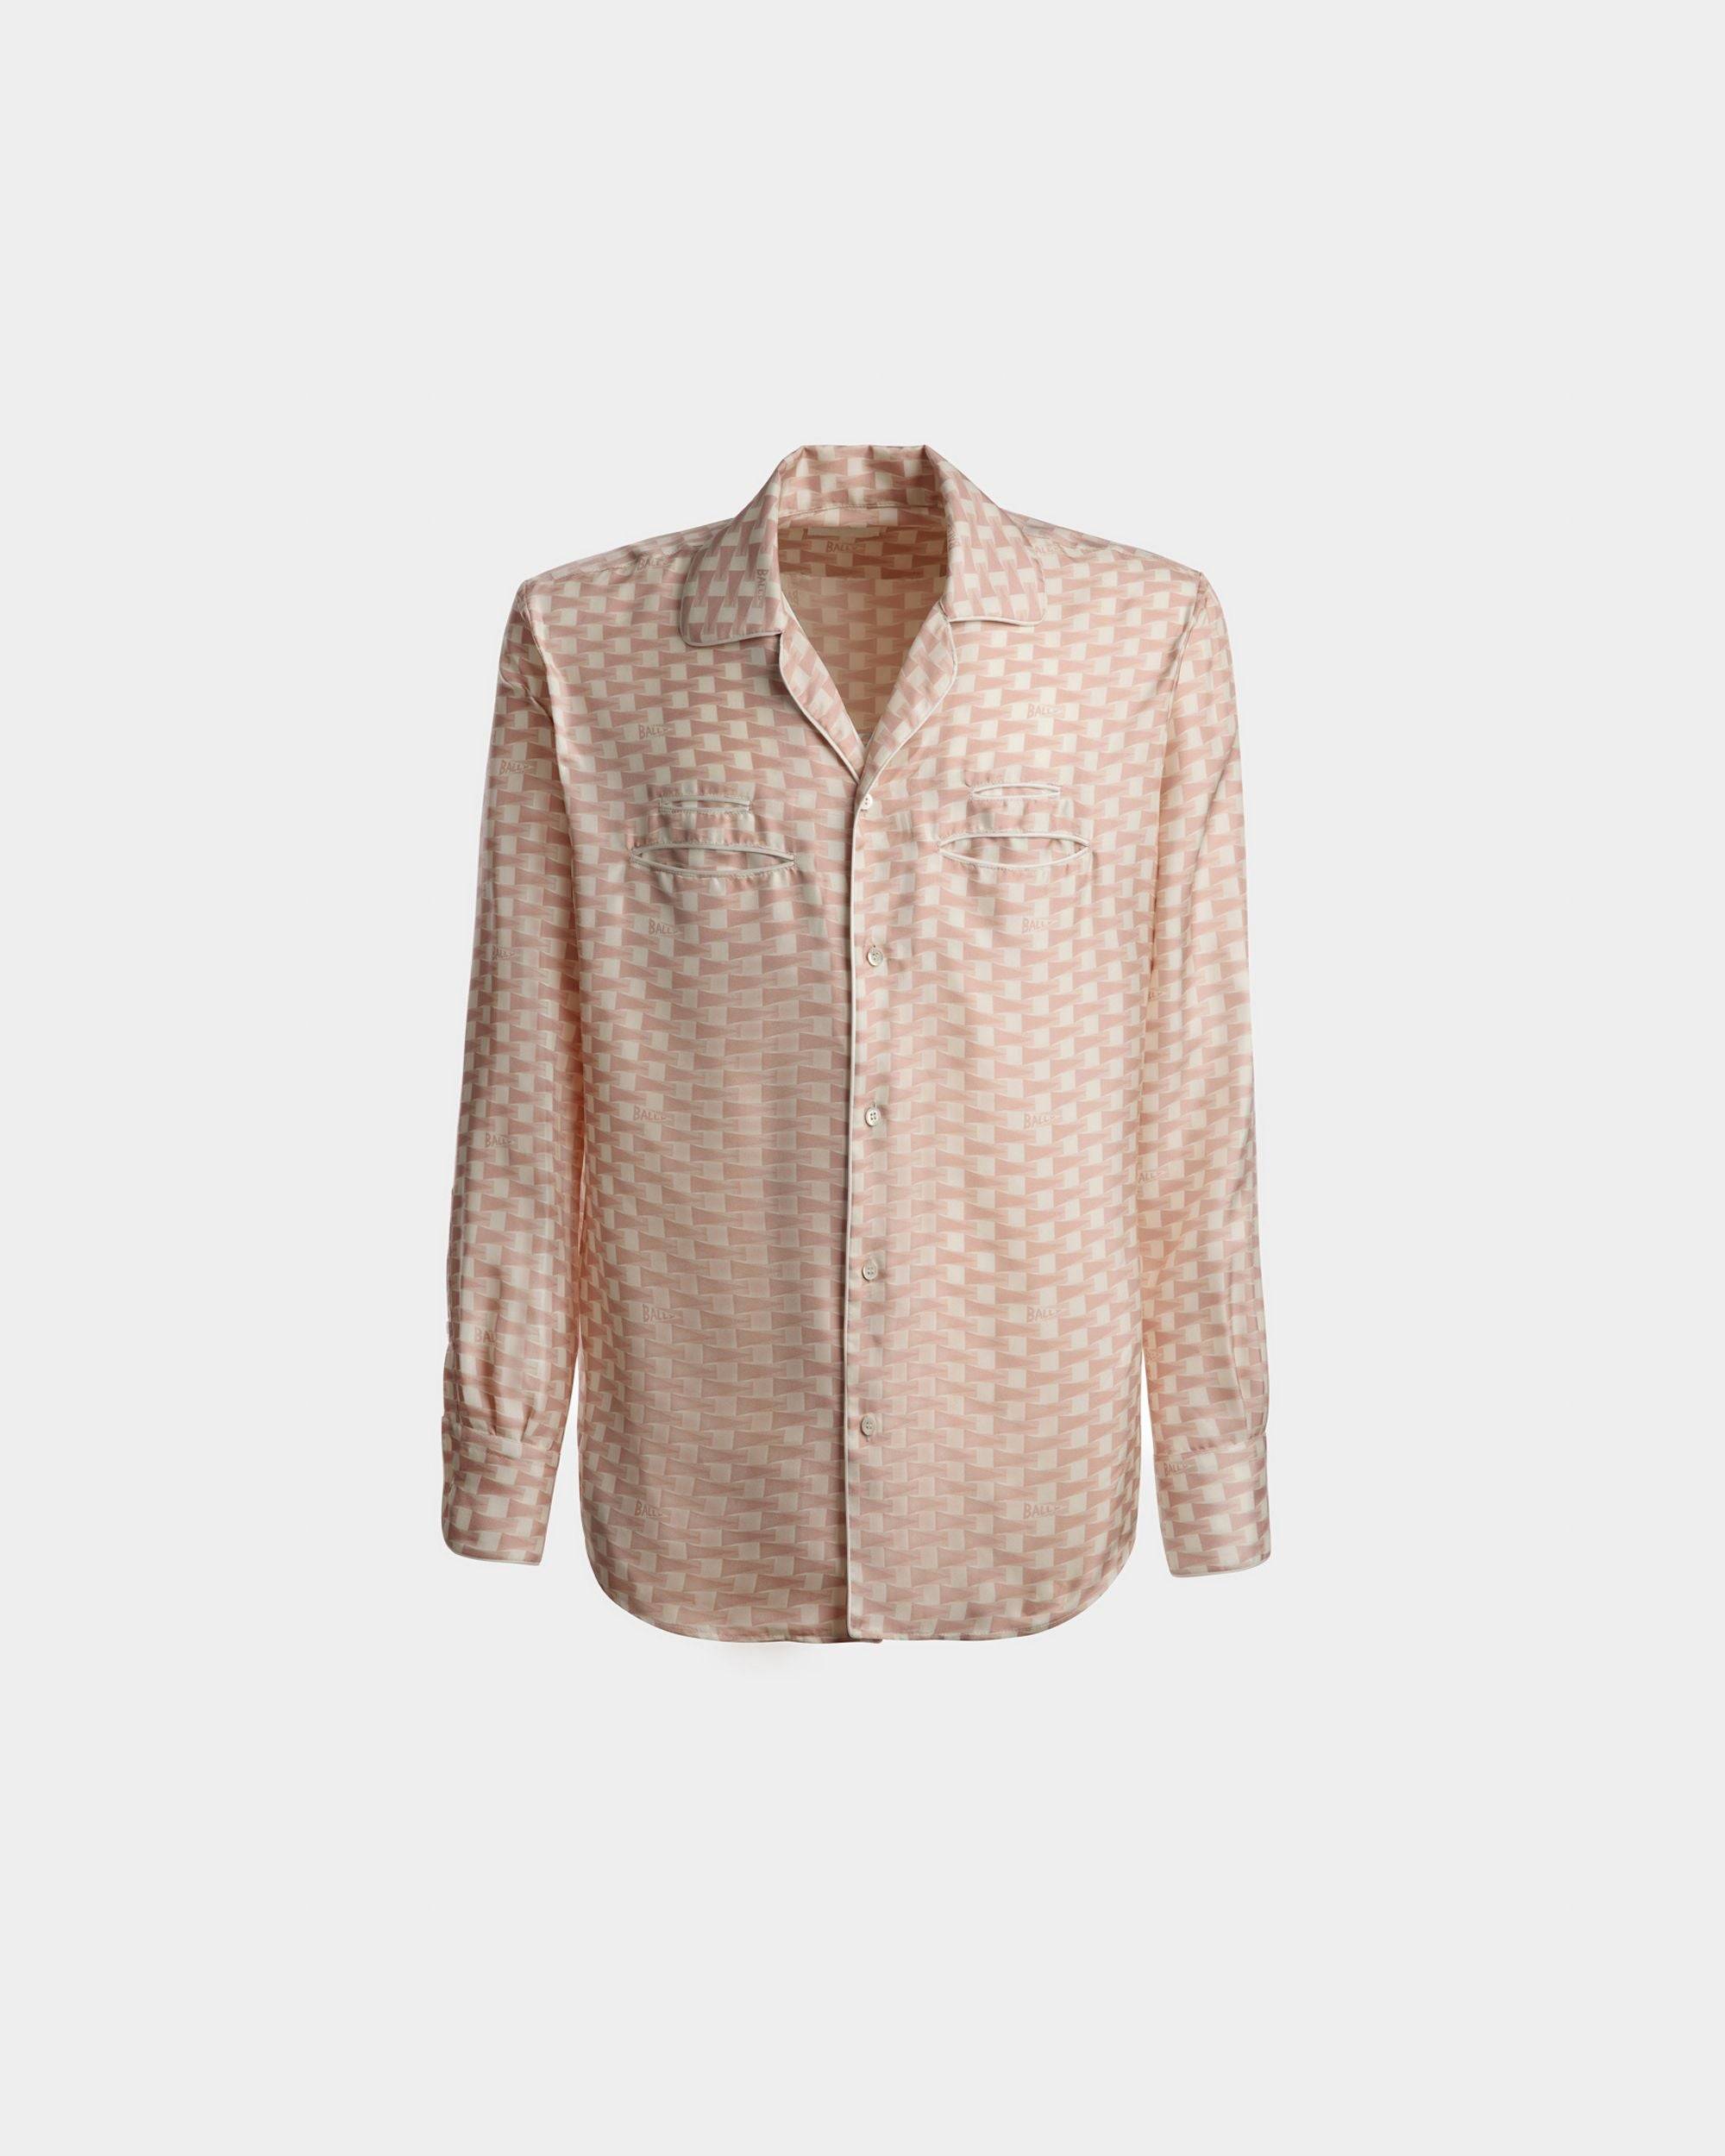 Hemd mit Pennant-Print | Herrenhemd | Seide in Dusty Petal | Bally | Still Life Vorderseite